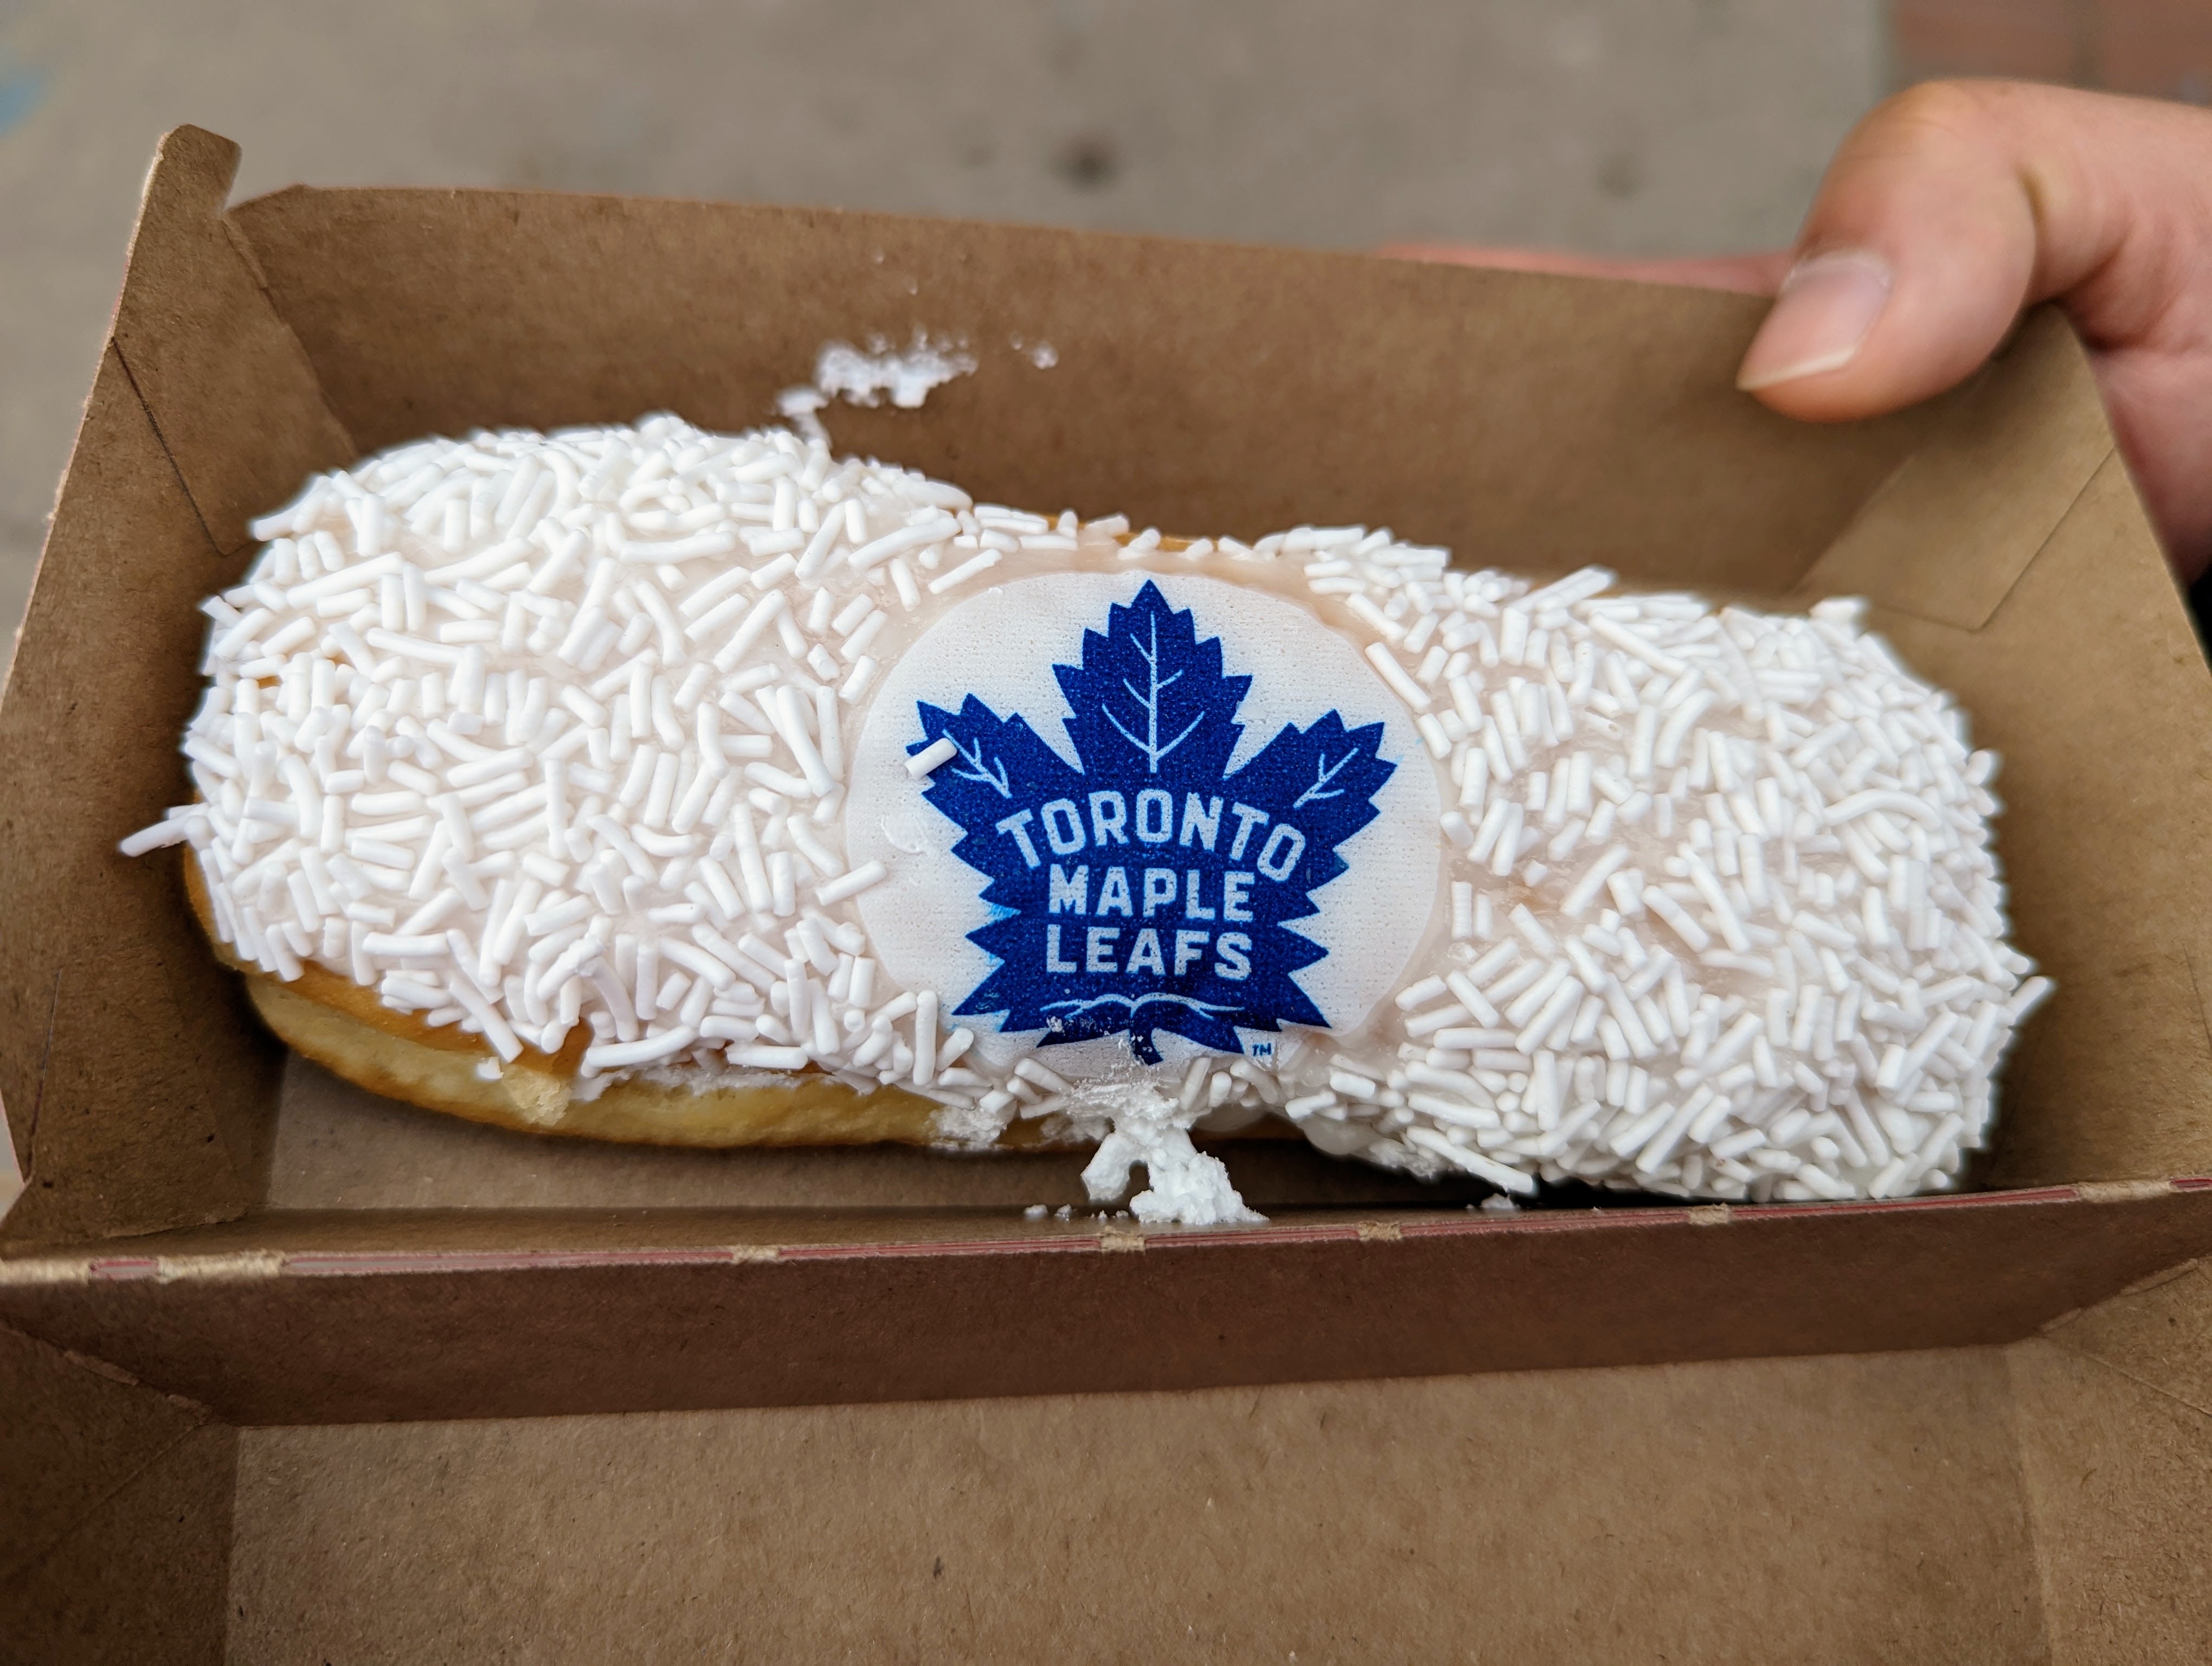 Smooch Food Toronto Maple Leafs Dream Donut from Tim Hortons